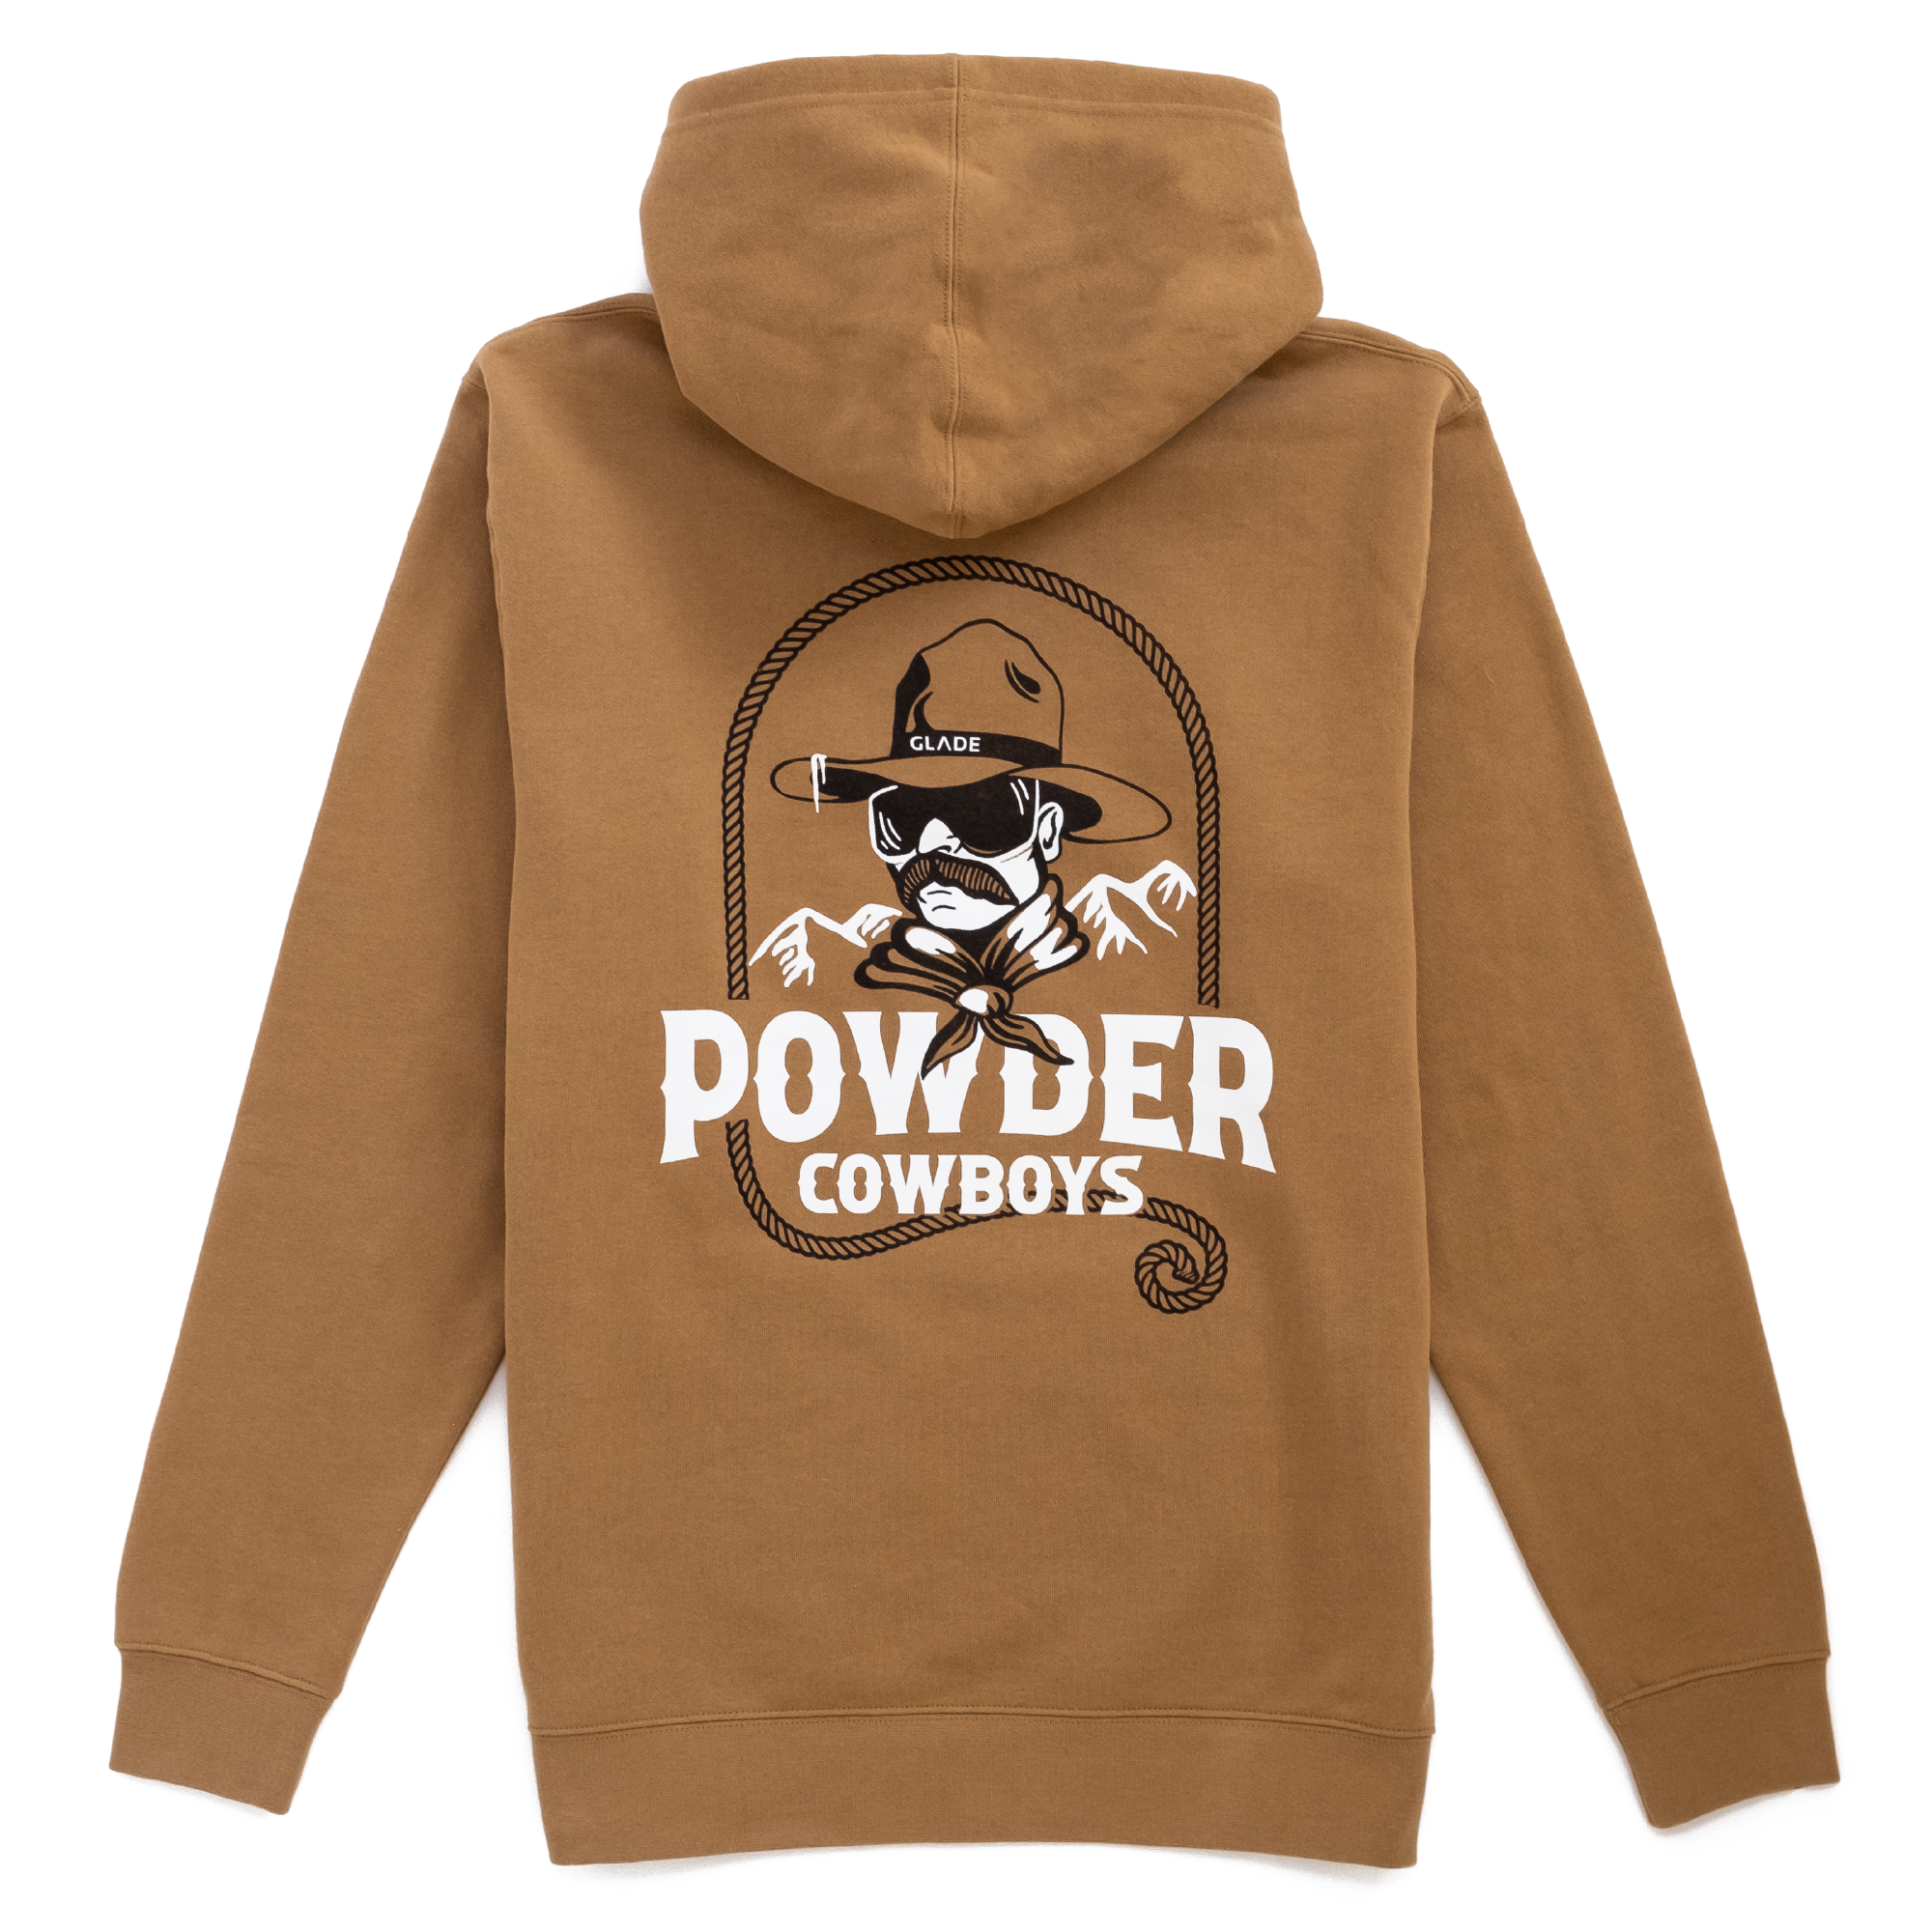 Powder Cowboys Hoodie